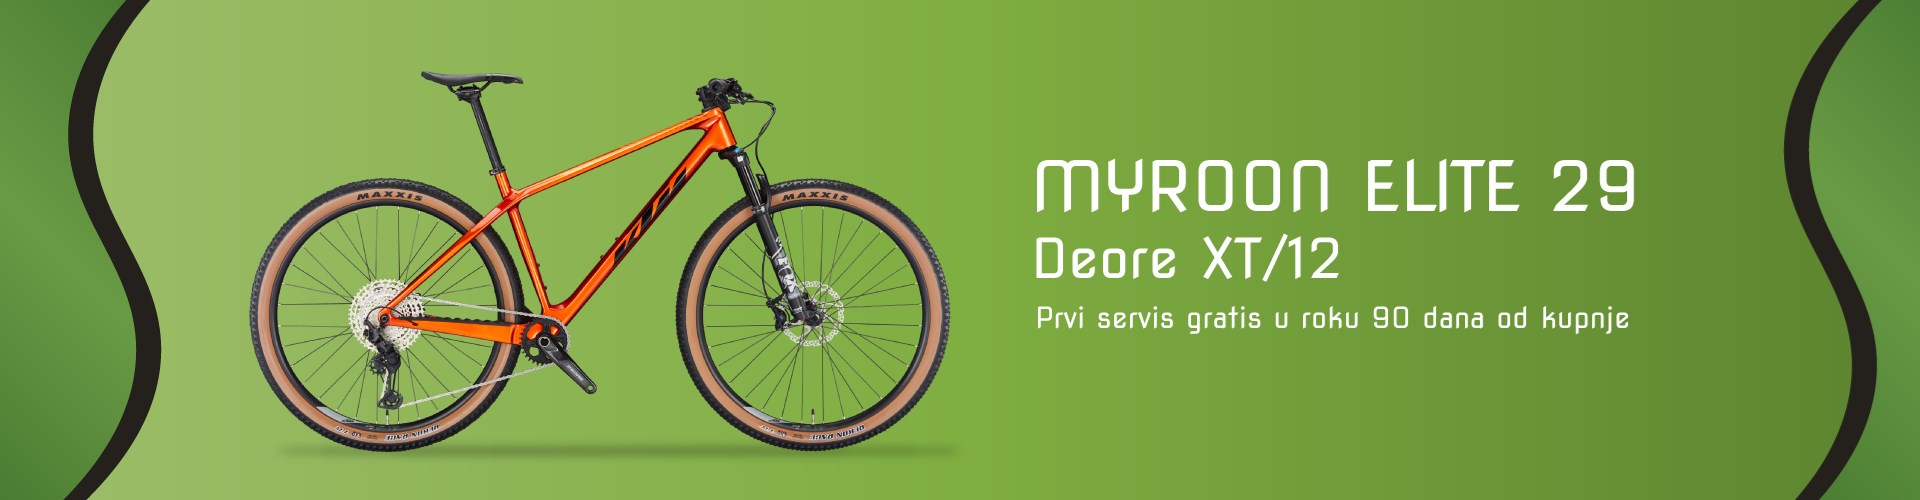 Bike-Myroon